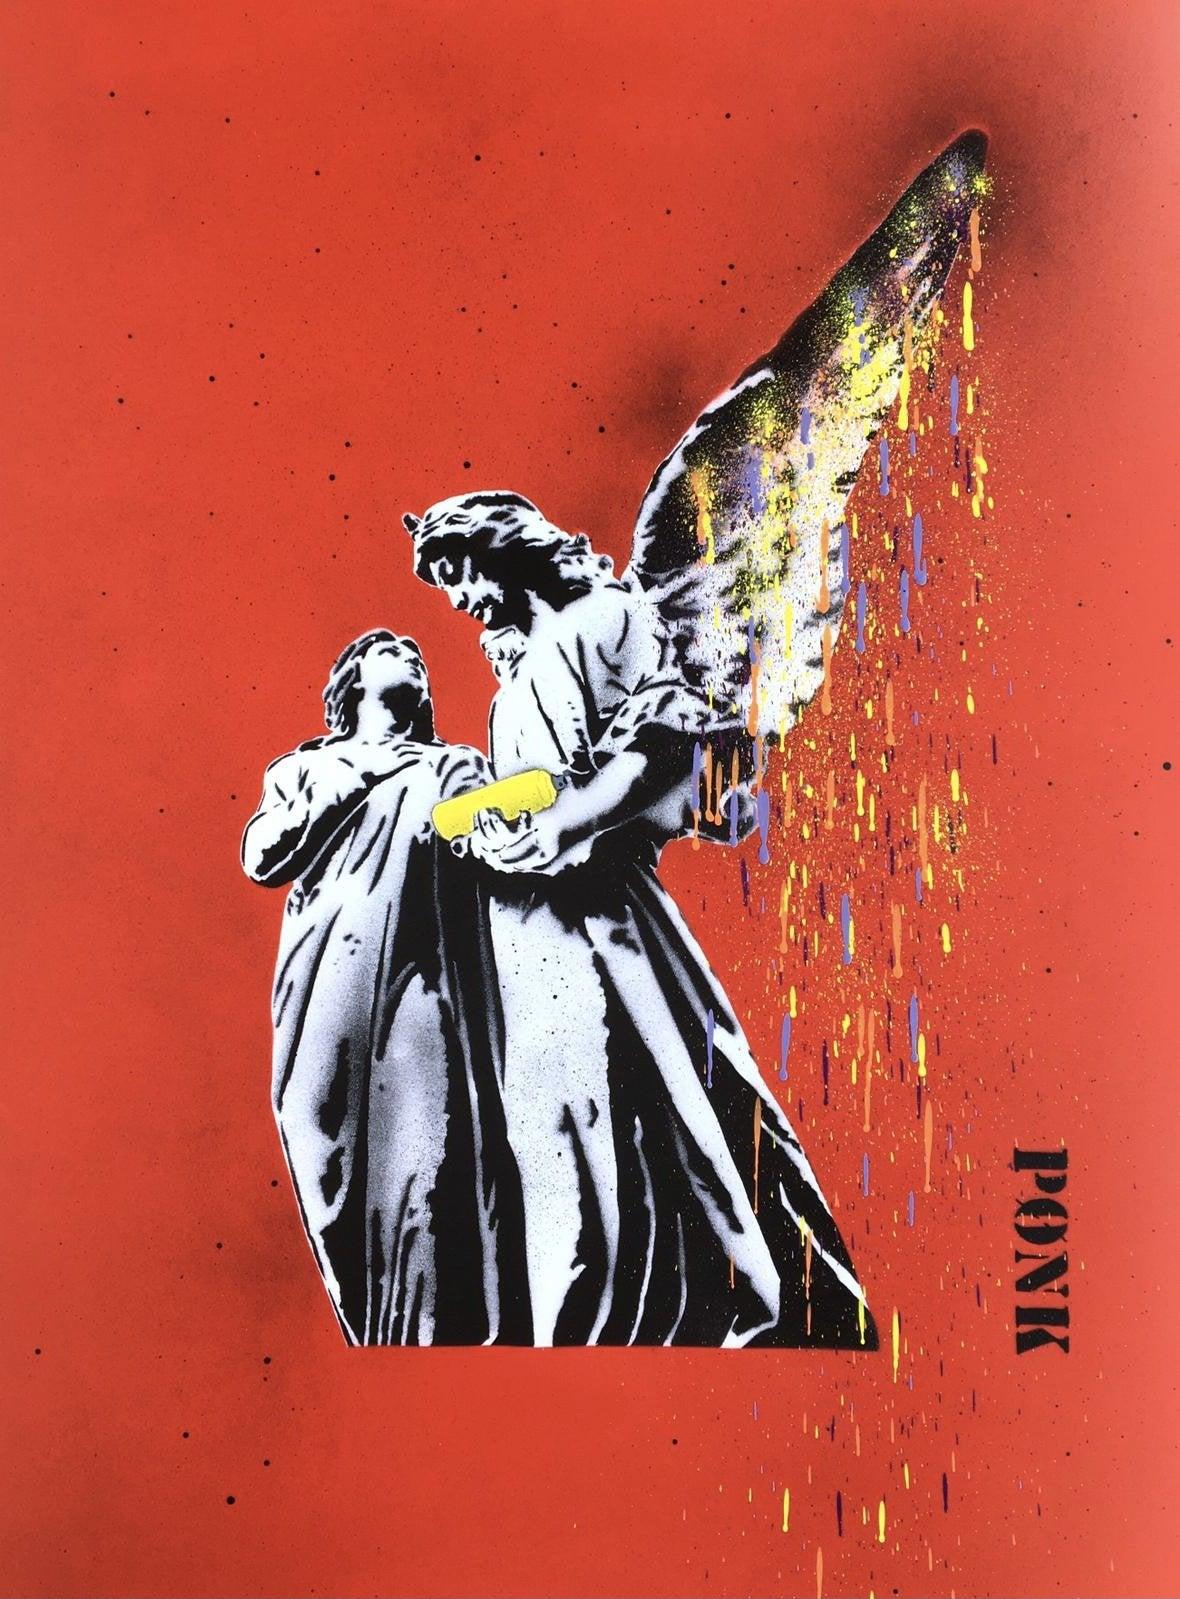 Spray for Love - 1/1 (Red) by PONK (Street Art), 2021 - Print by PØNK